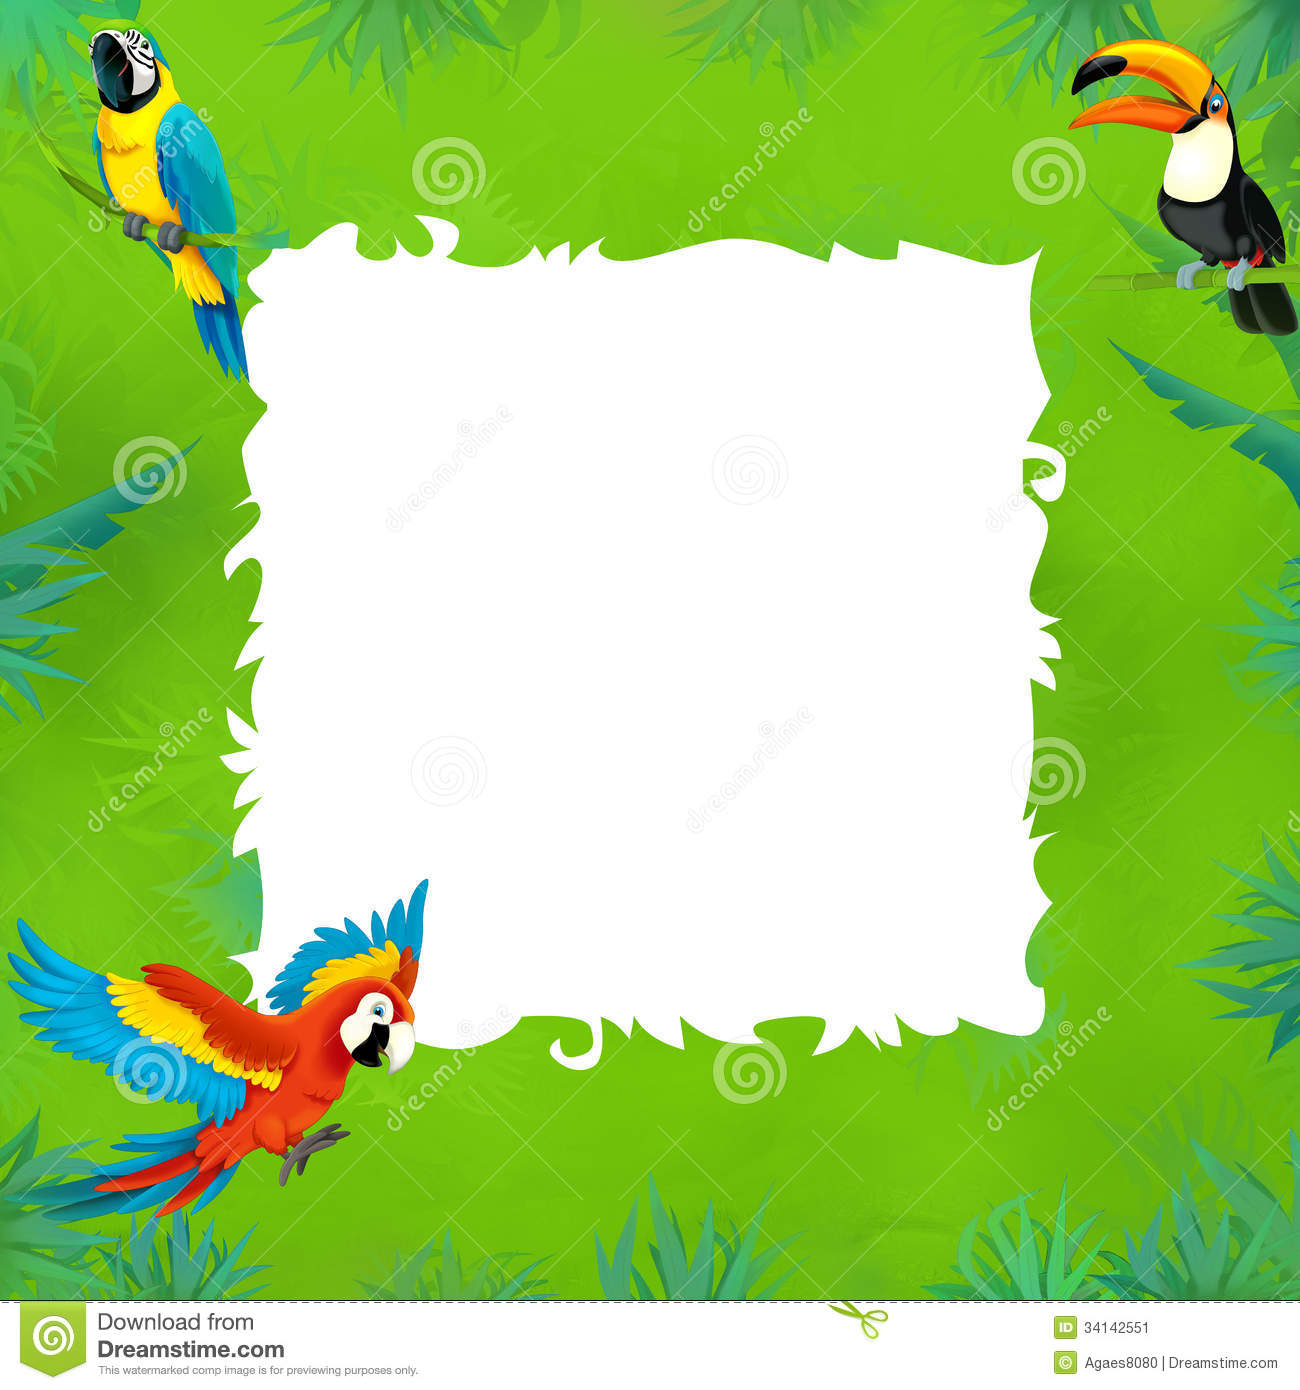 Cartoon Safari   Jungle   Frame Stock Image   Image  34142551